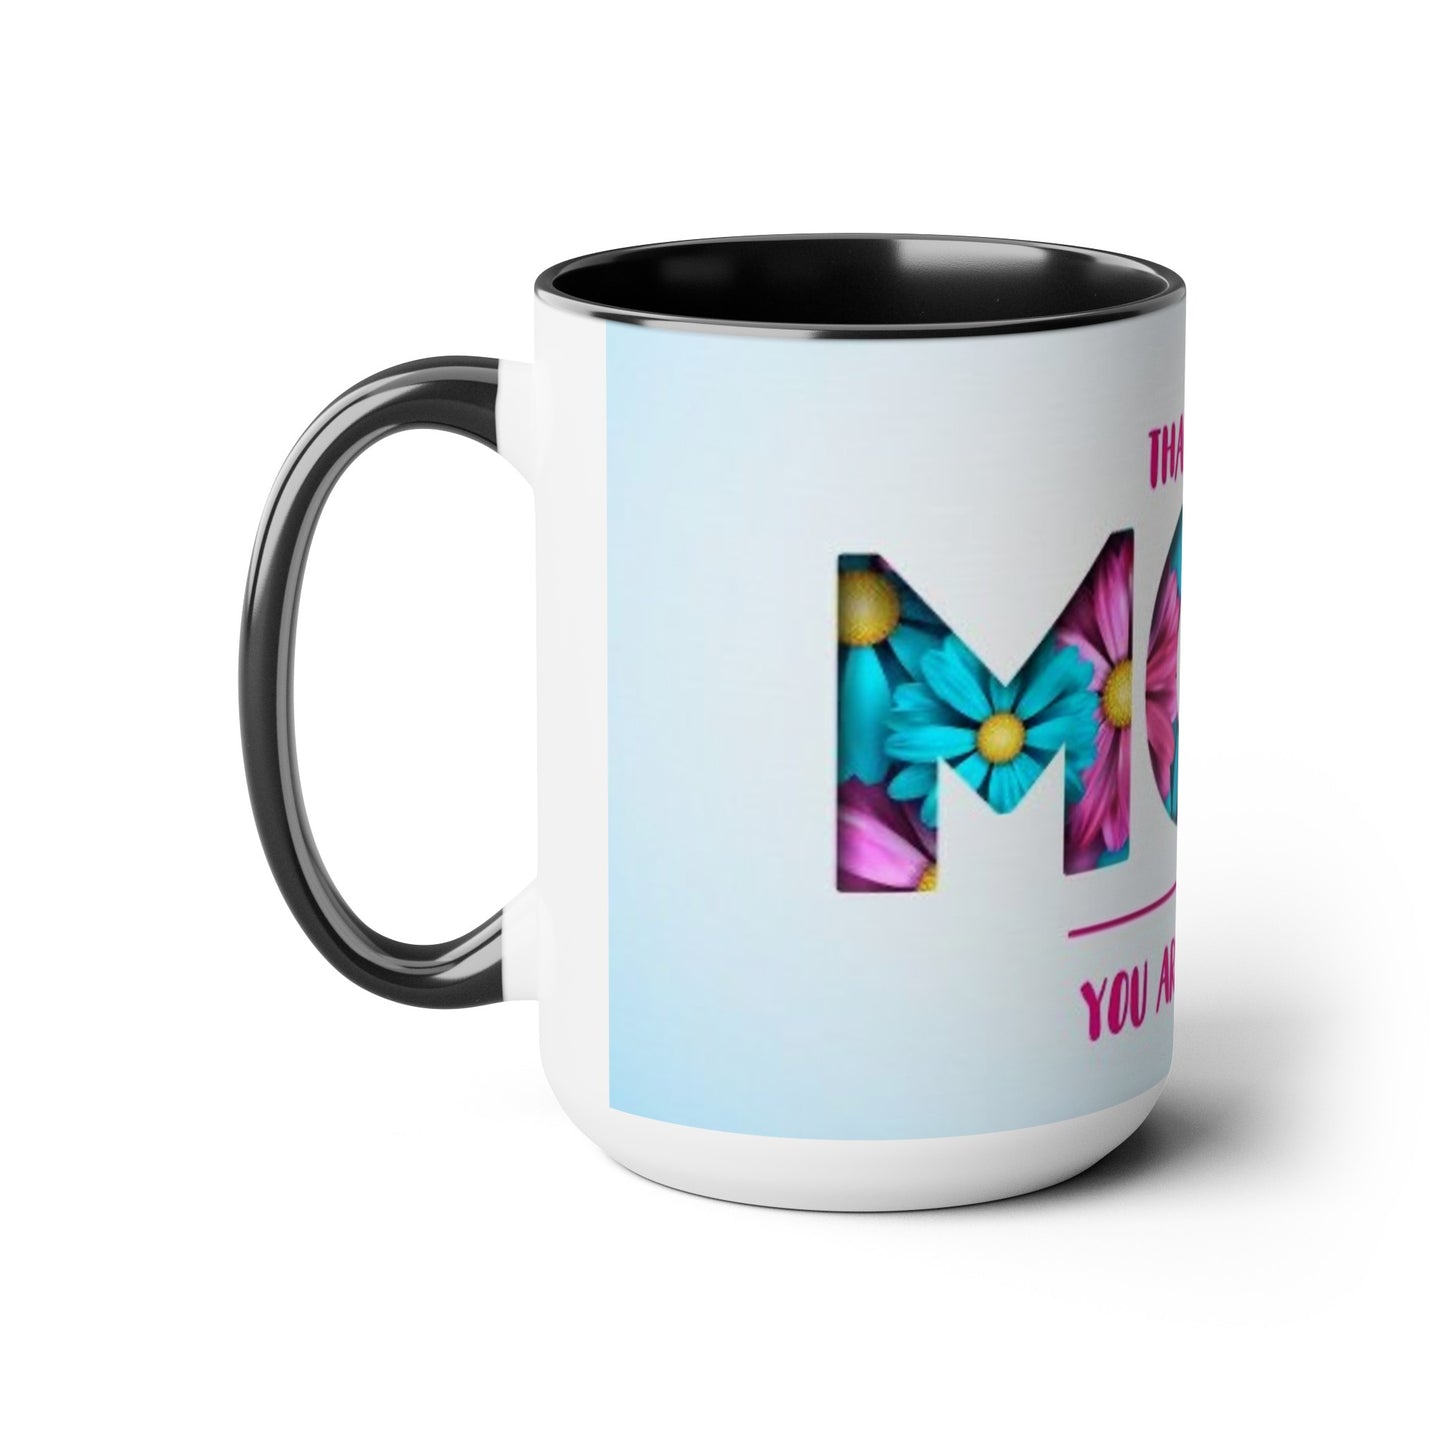 The Best MOM Two-Tone Coffee Mugs, 15oz